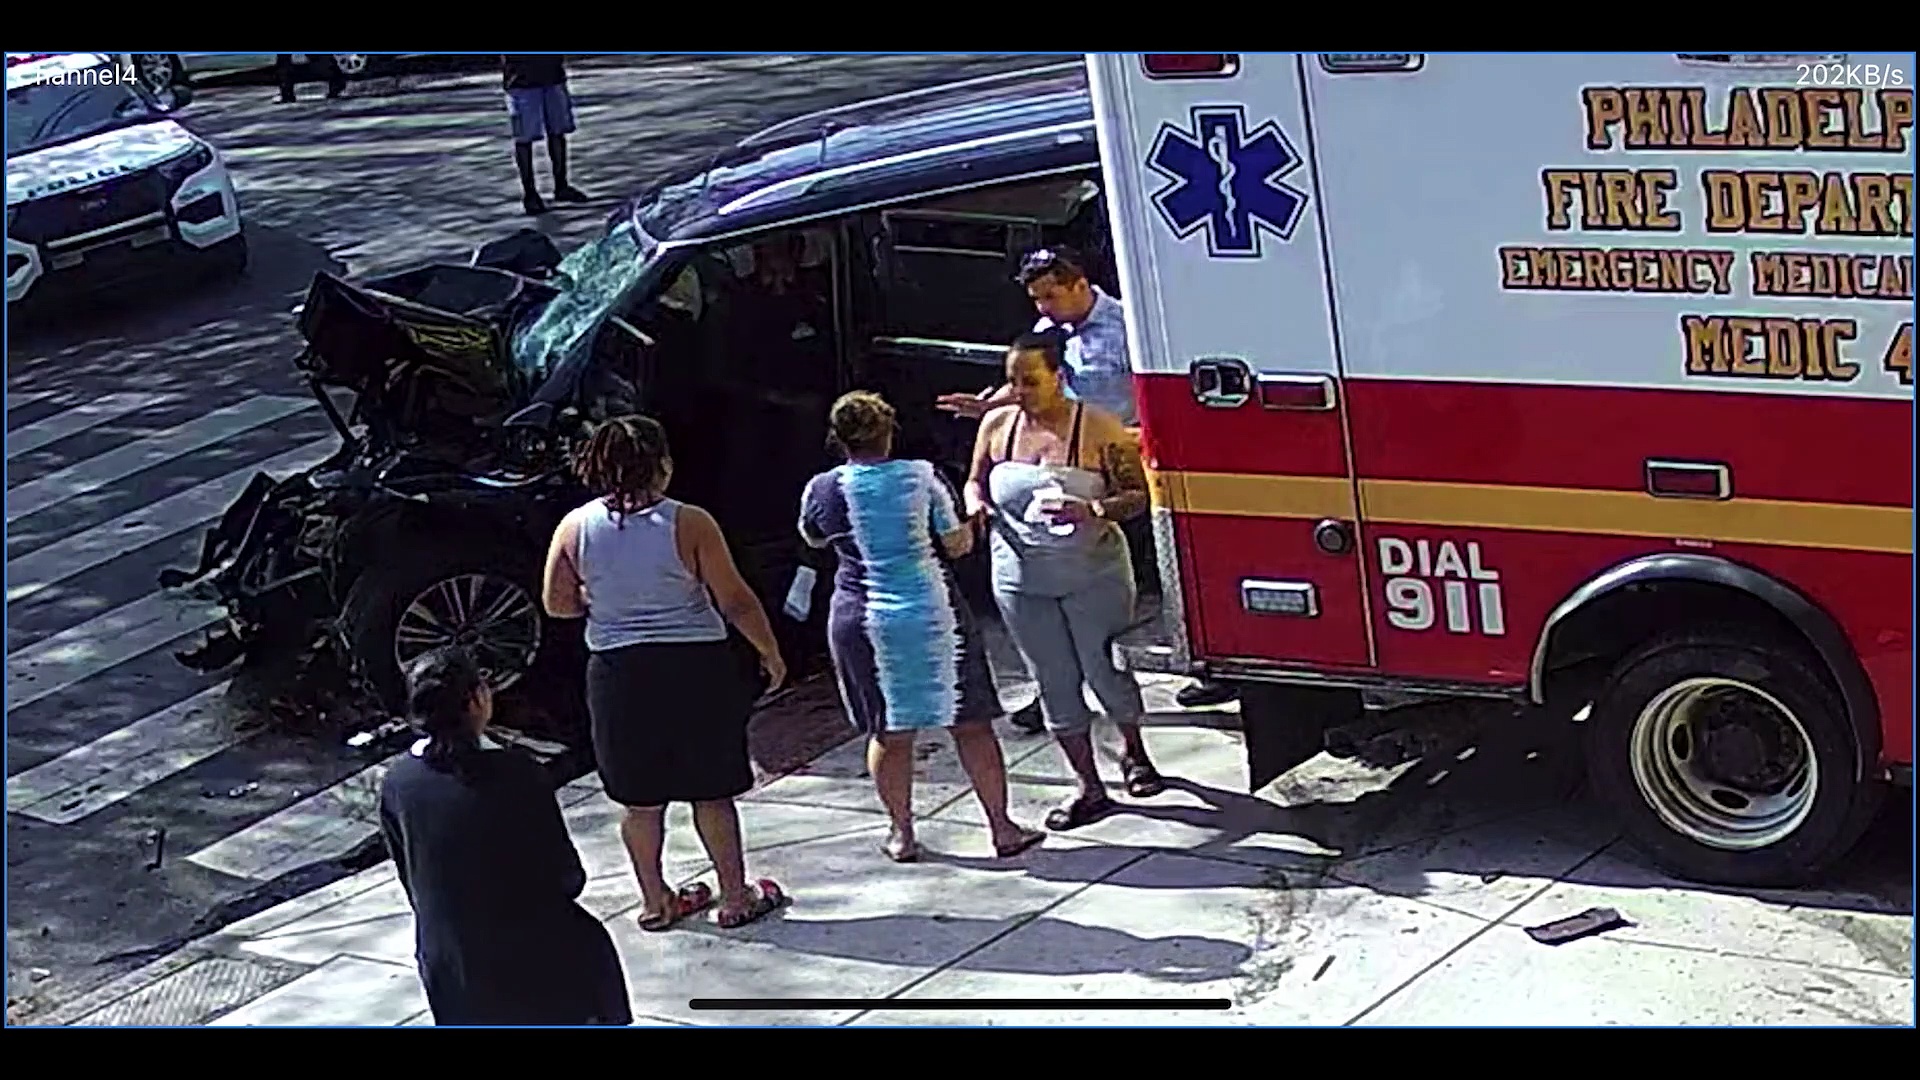 SUV Broadsides Ambulance in Philadelphia